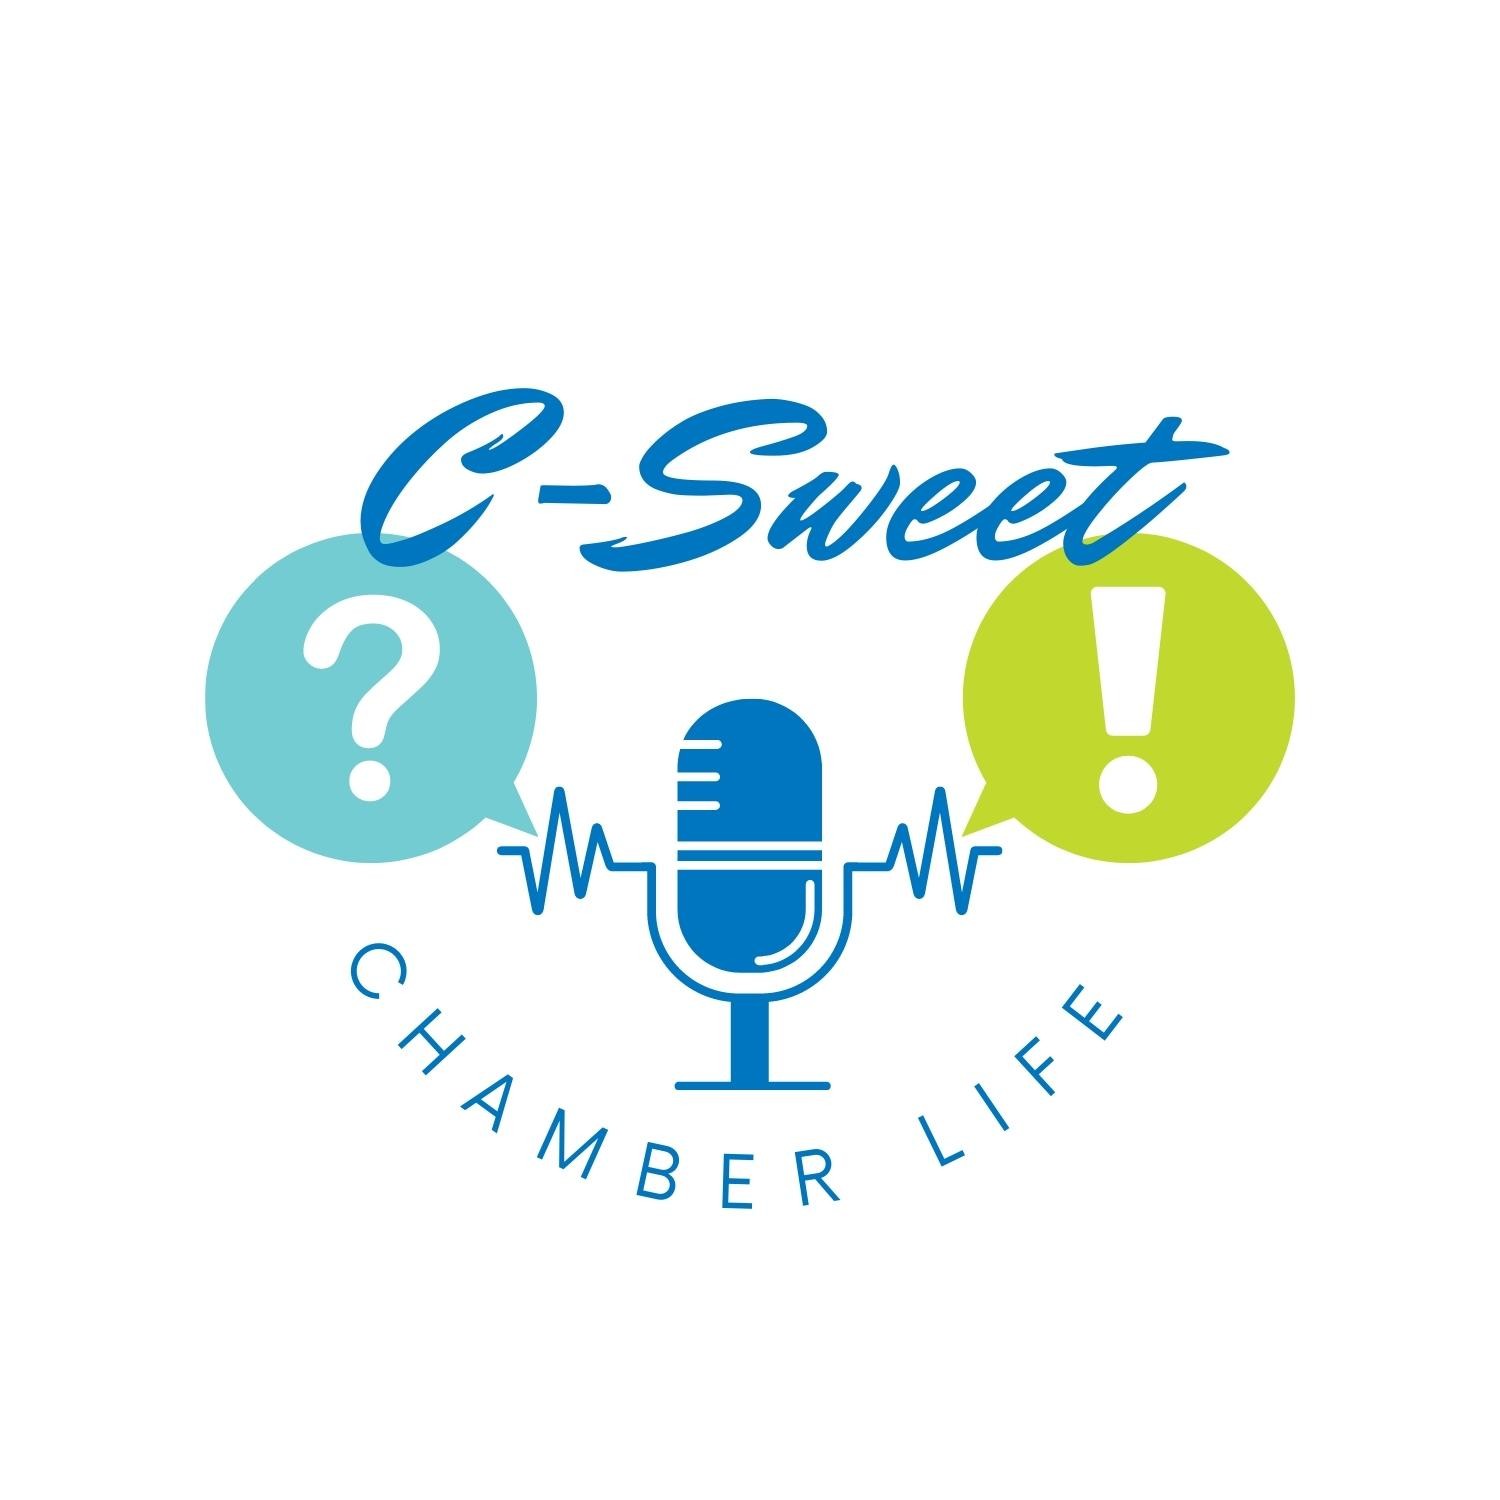 C-Sweet Chamber Life